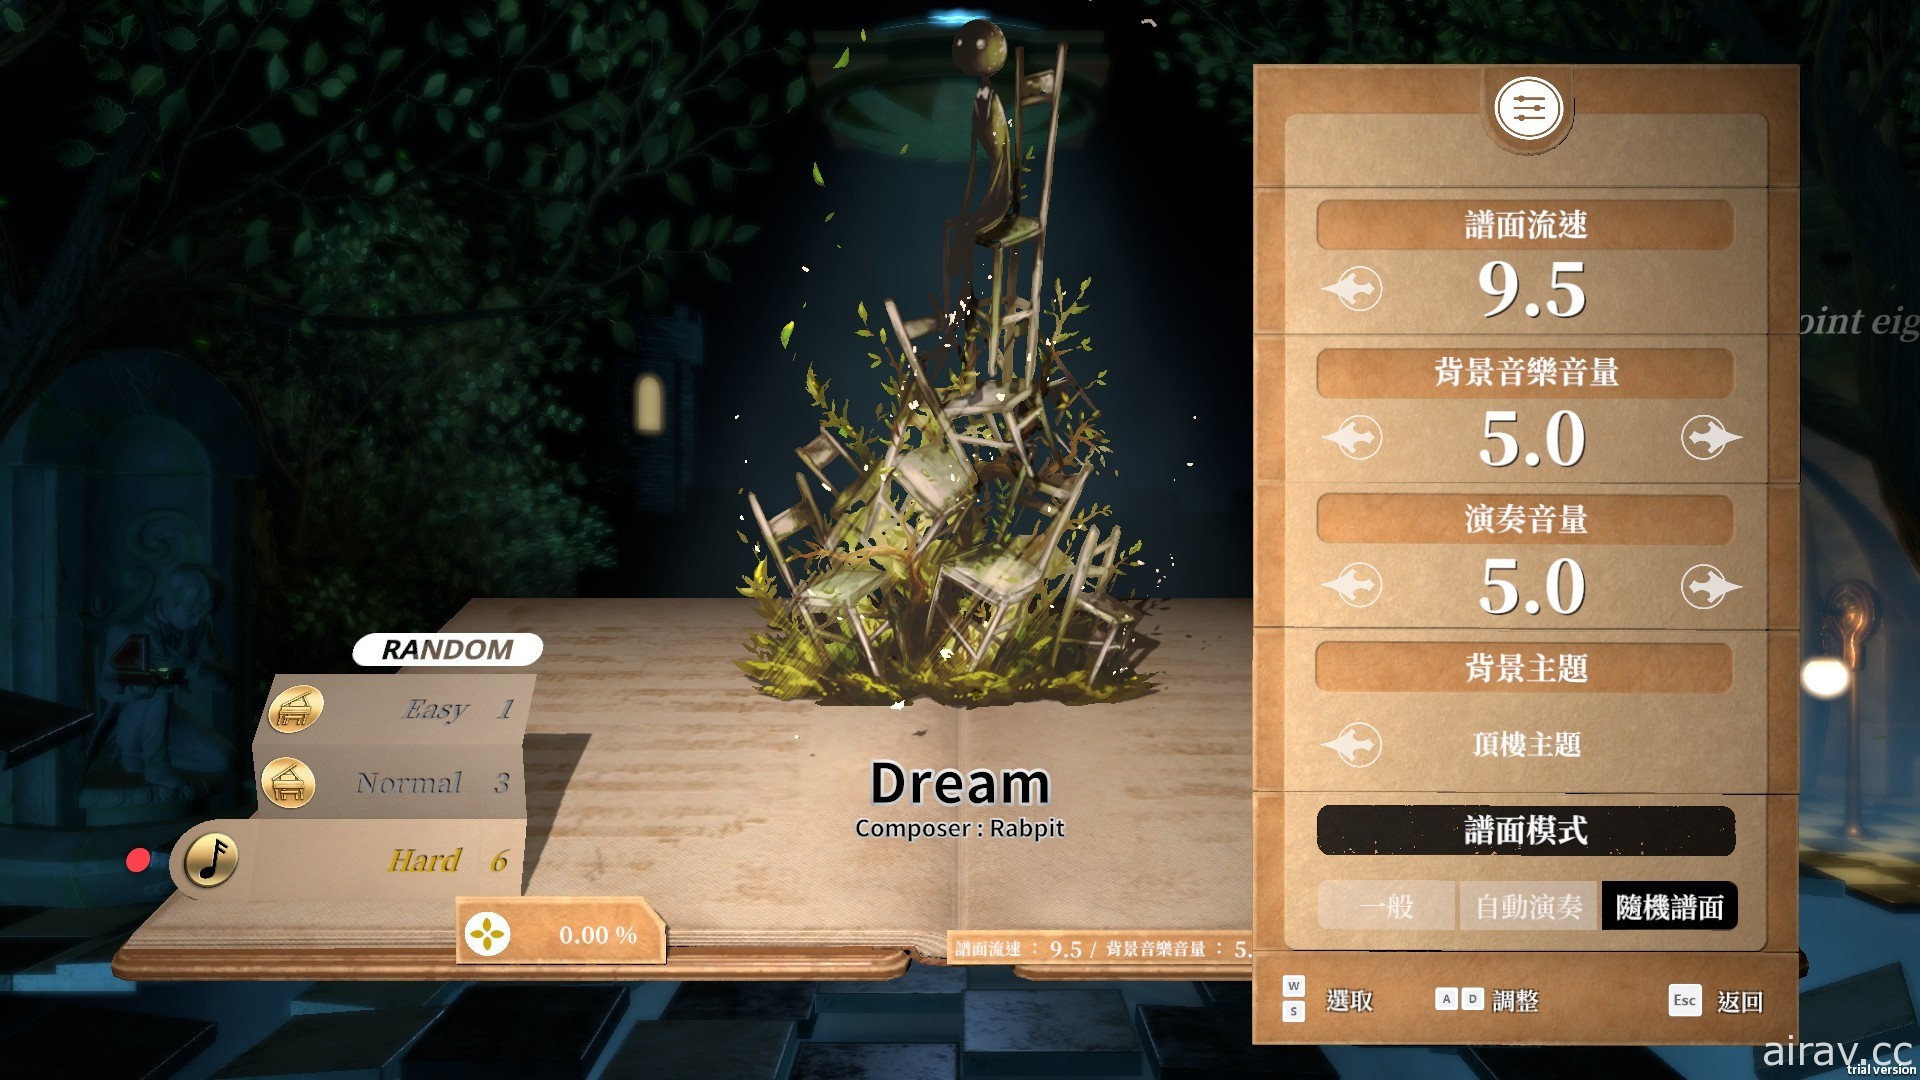 《DEEMO -Reborn-》PC 版今日于 Steam 平台上架 推出新功能与三款 DLC 曲包